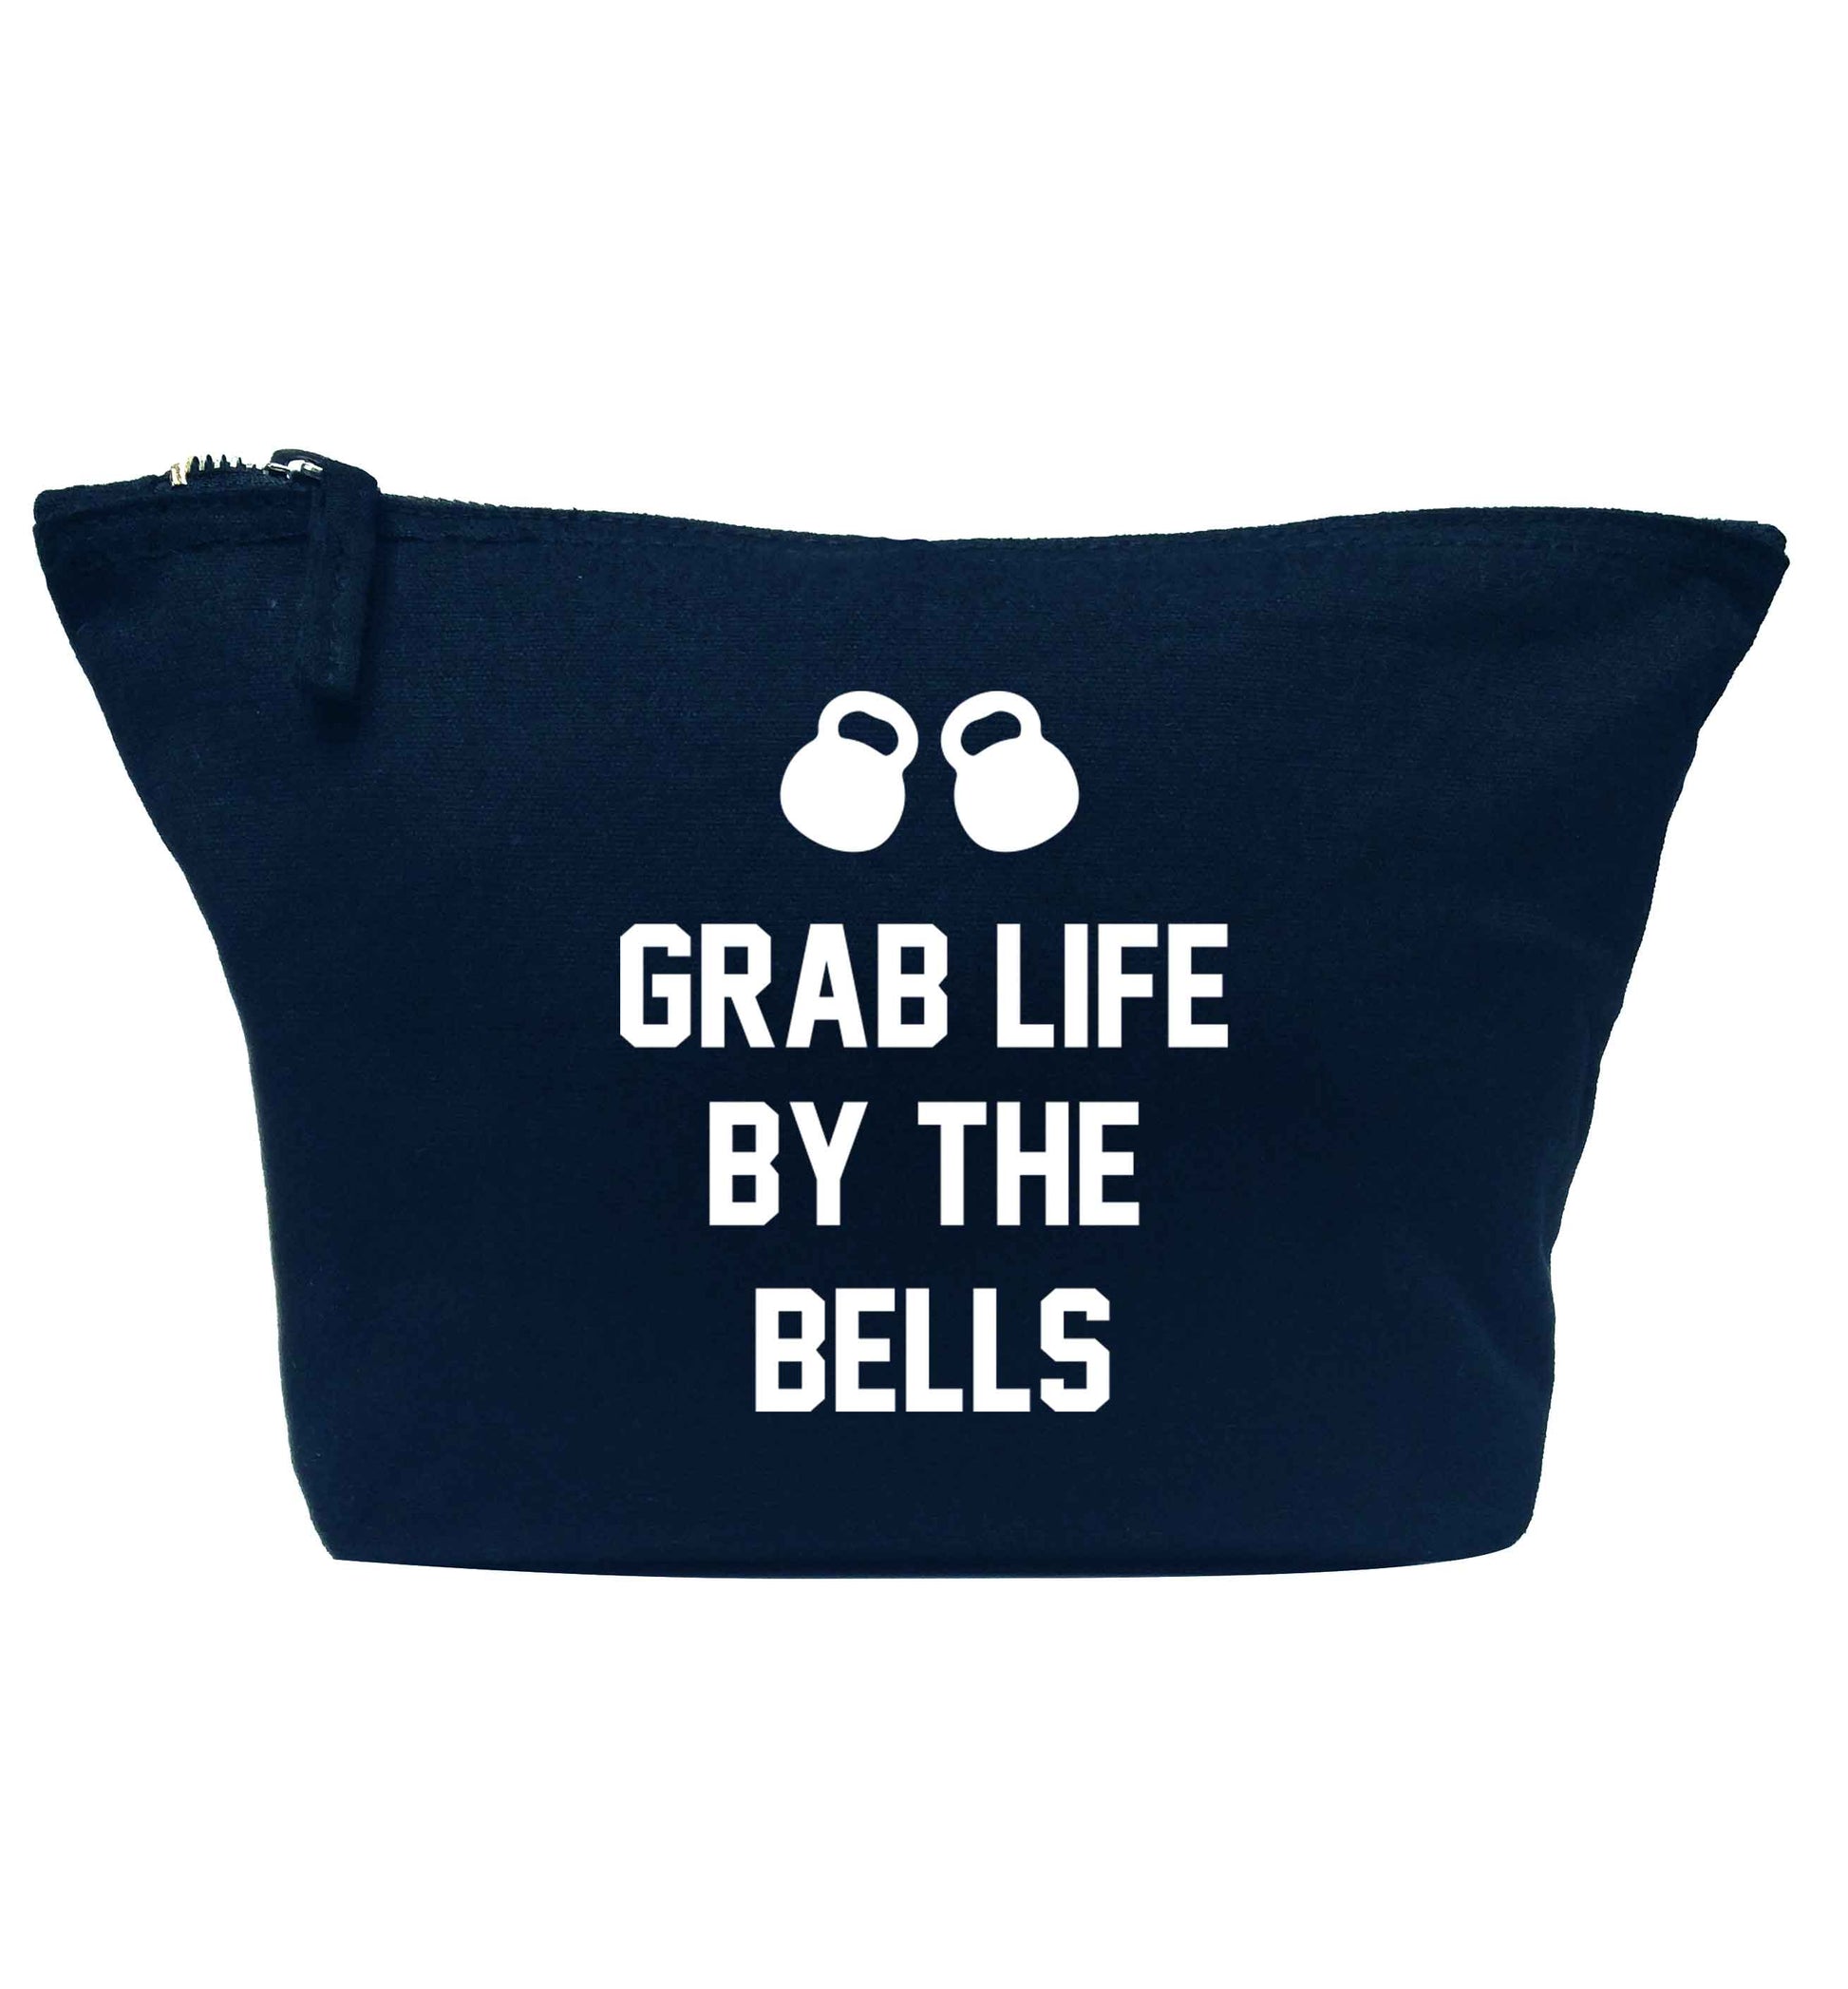 Grab life by the bells navy makeup bag